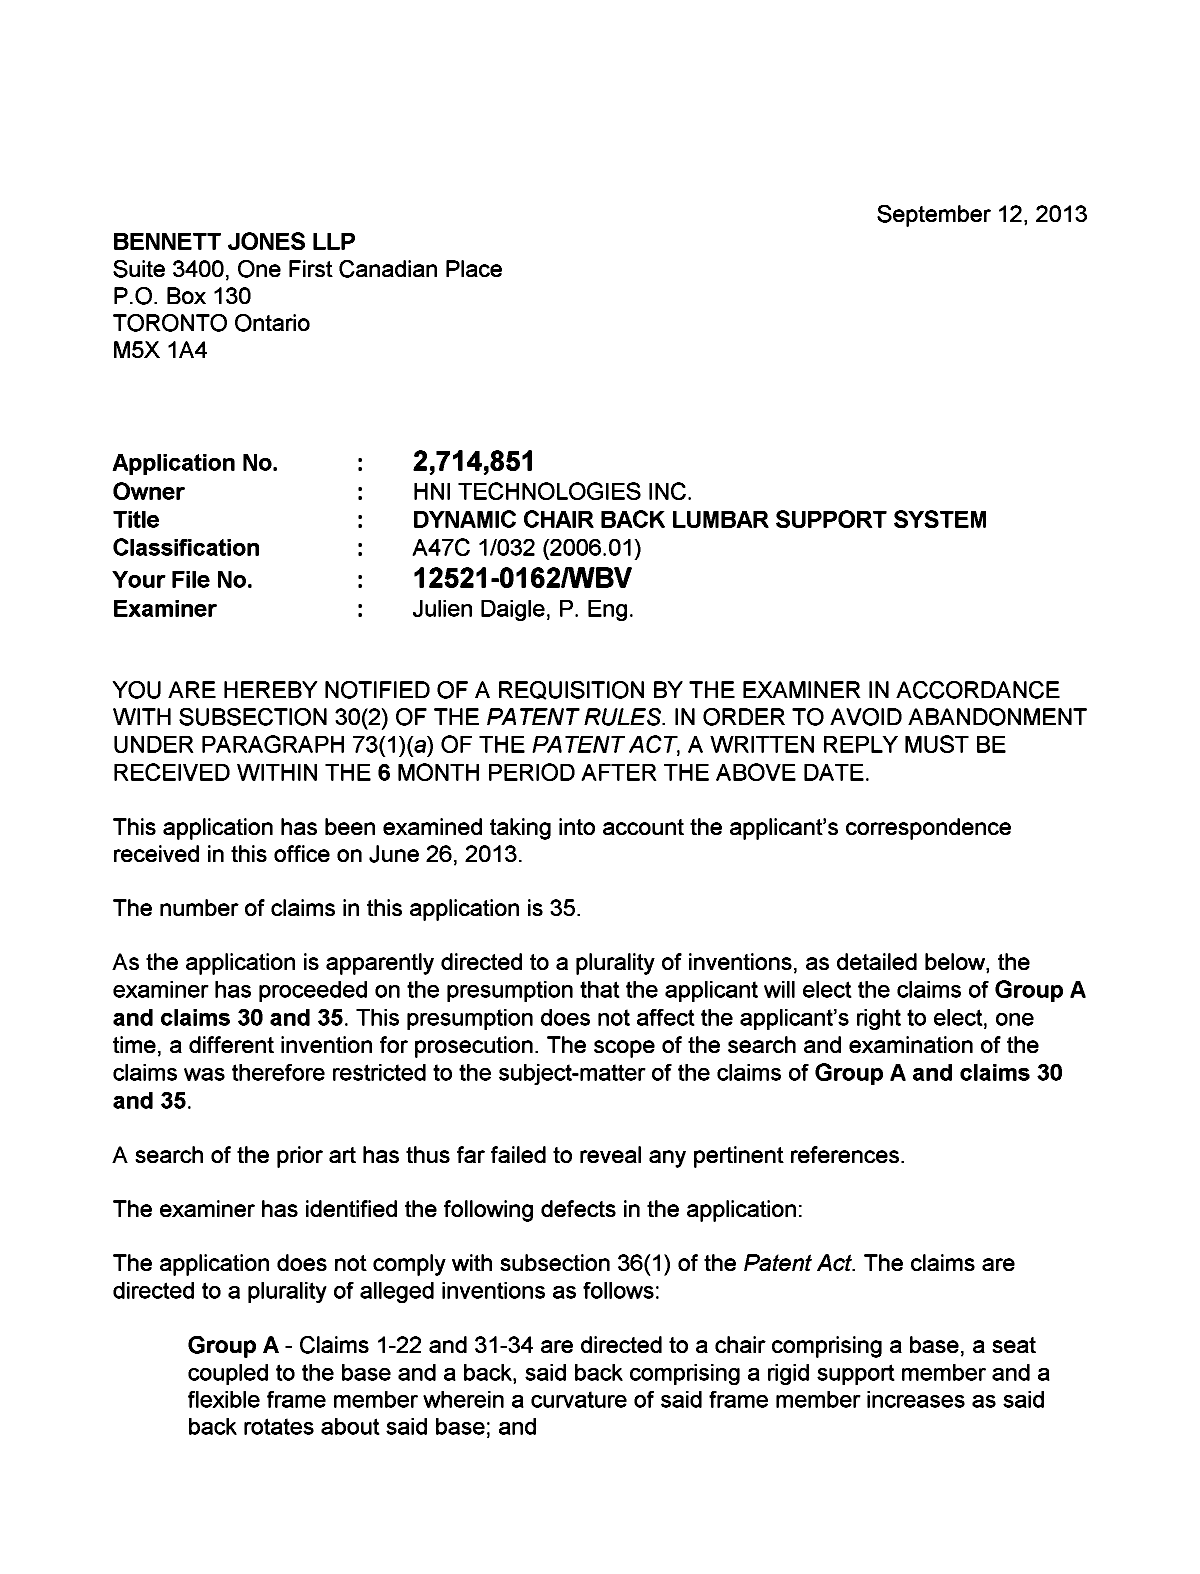 Canadian Patent Document 2714851. Prosecution-Amendment 20130912. Image 1 of 2